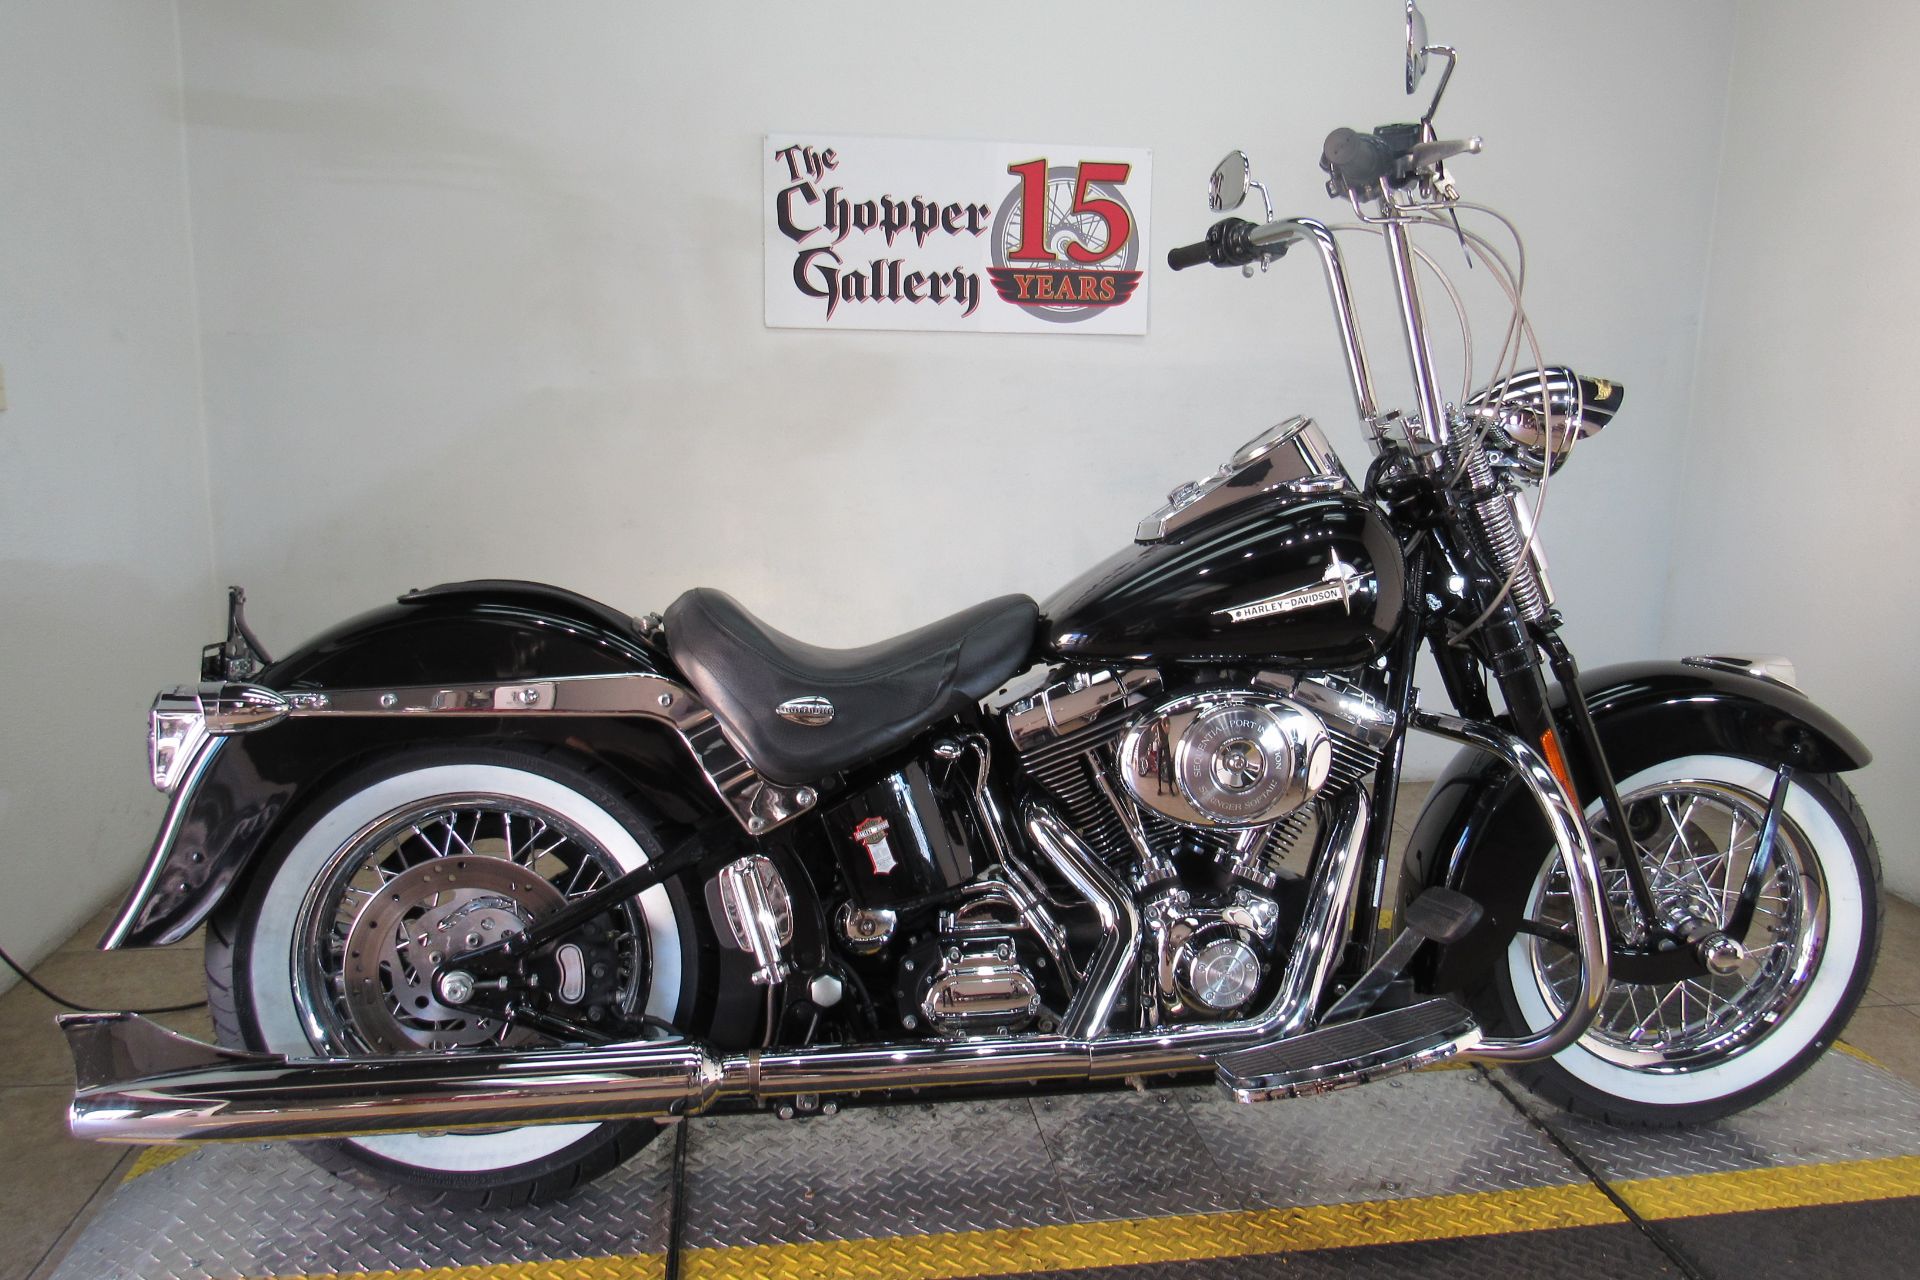 2005 Harley-Davidson FLSTSC/FLSTSCI Softail® Springer® Classic in Temecula, California - Photo 5